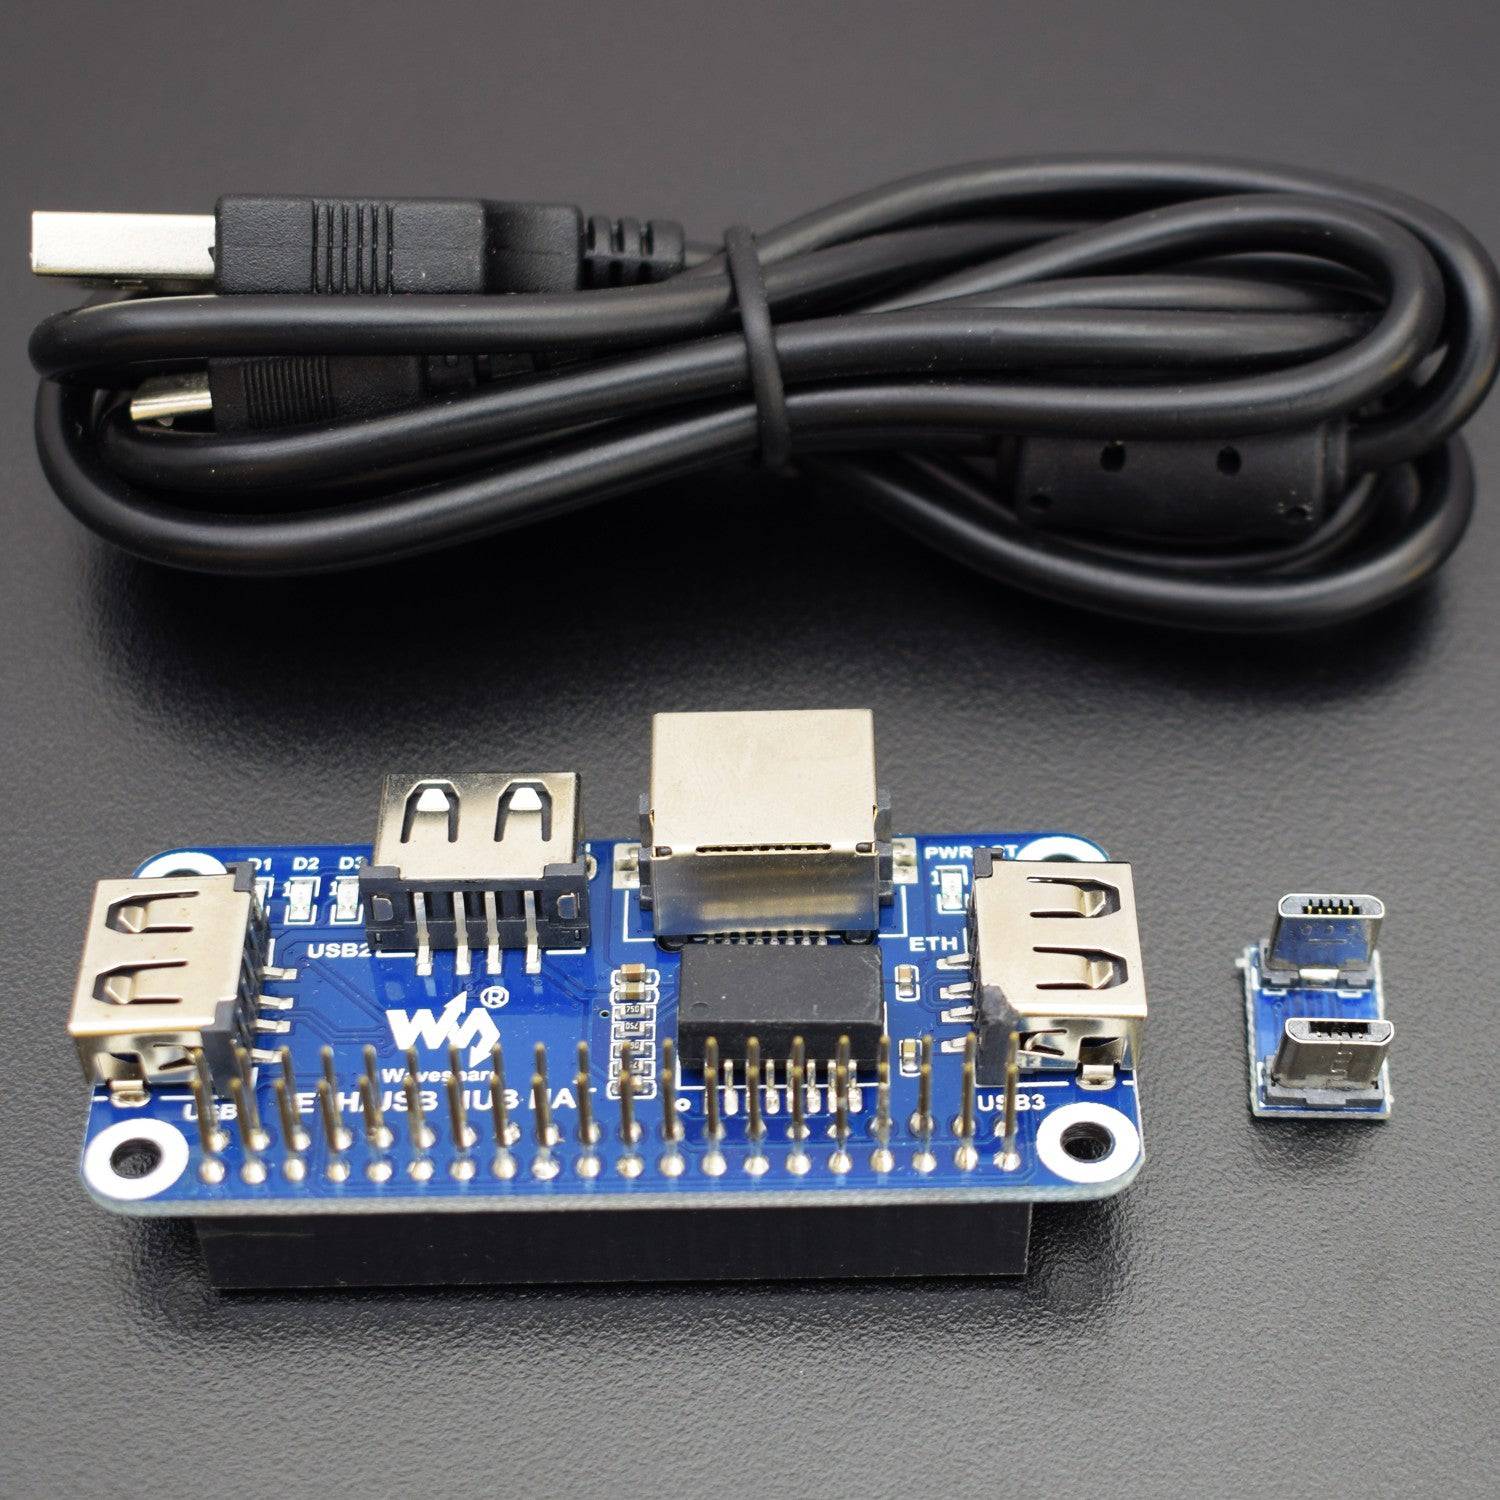 Ethernet / USB HUB HAT for Raspberry Pi, 1x RJ45 Ethernet Port, 3x USB Ports